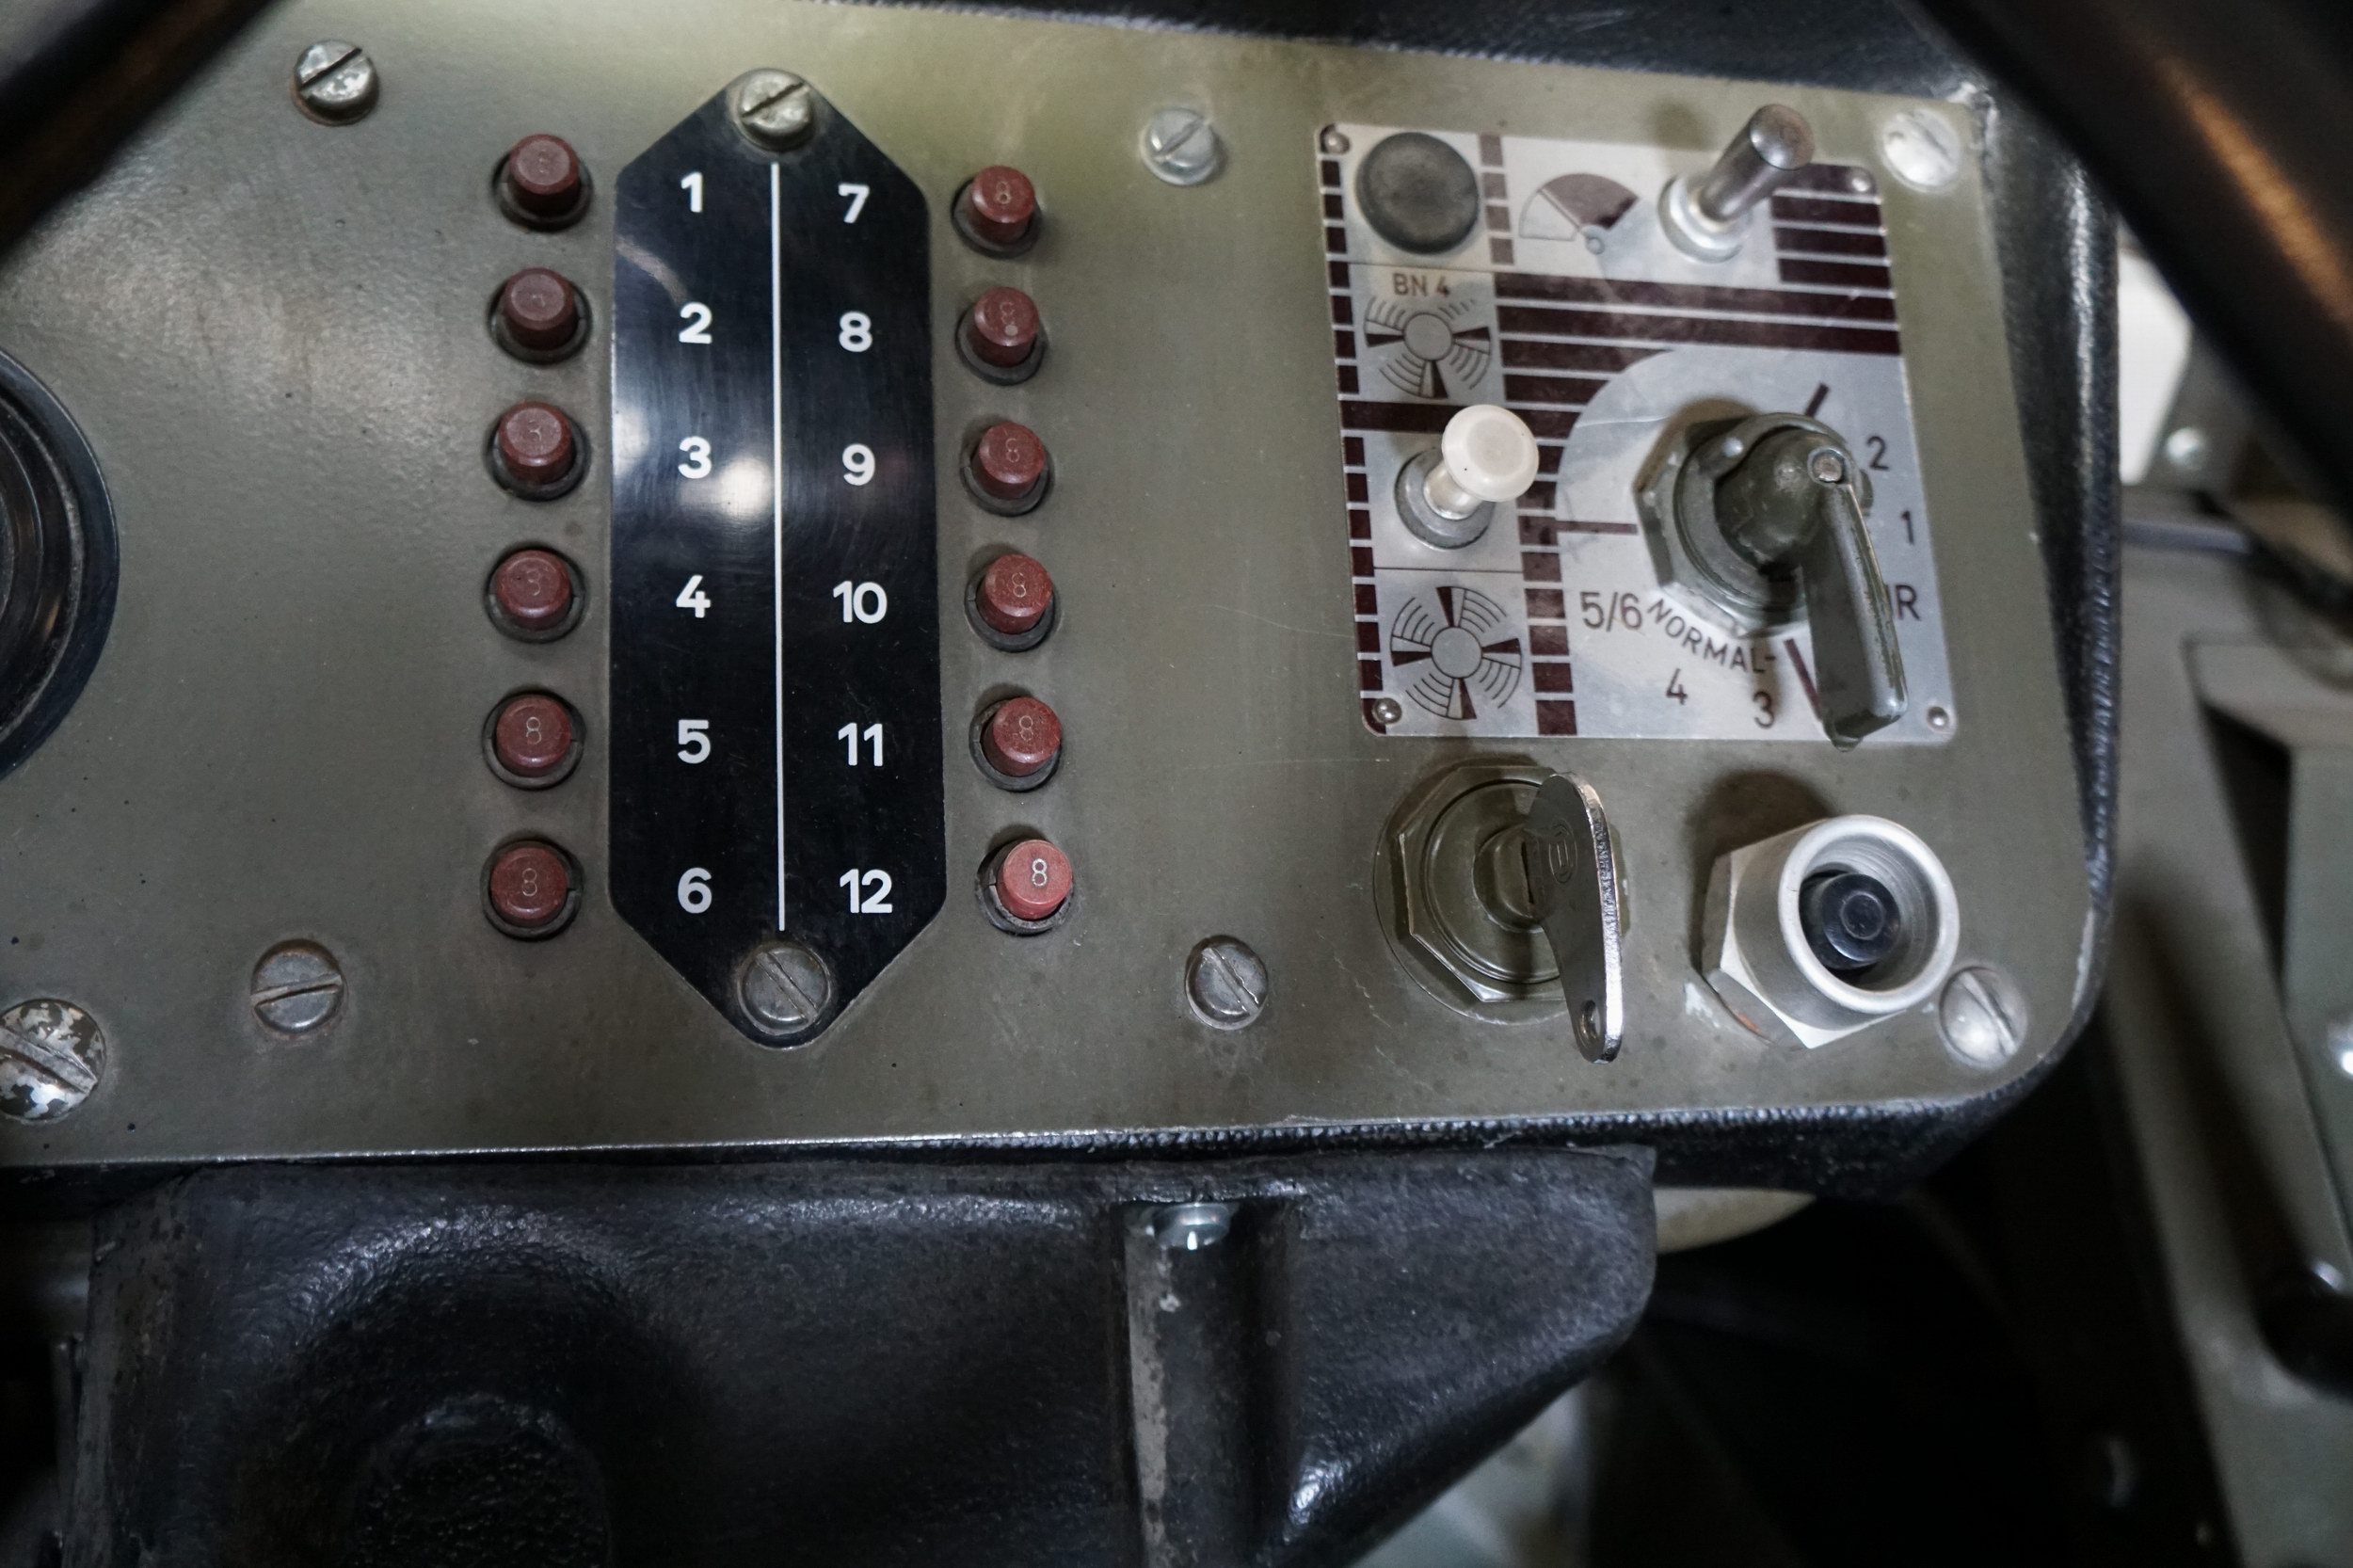 Original Swiss Army Telephone Unit 710.  
First U ..